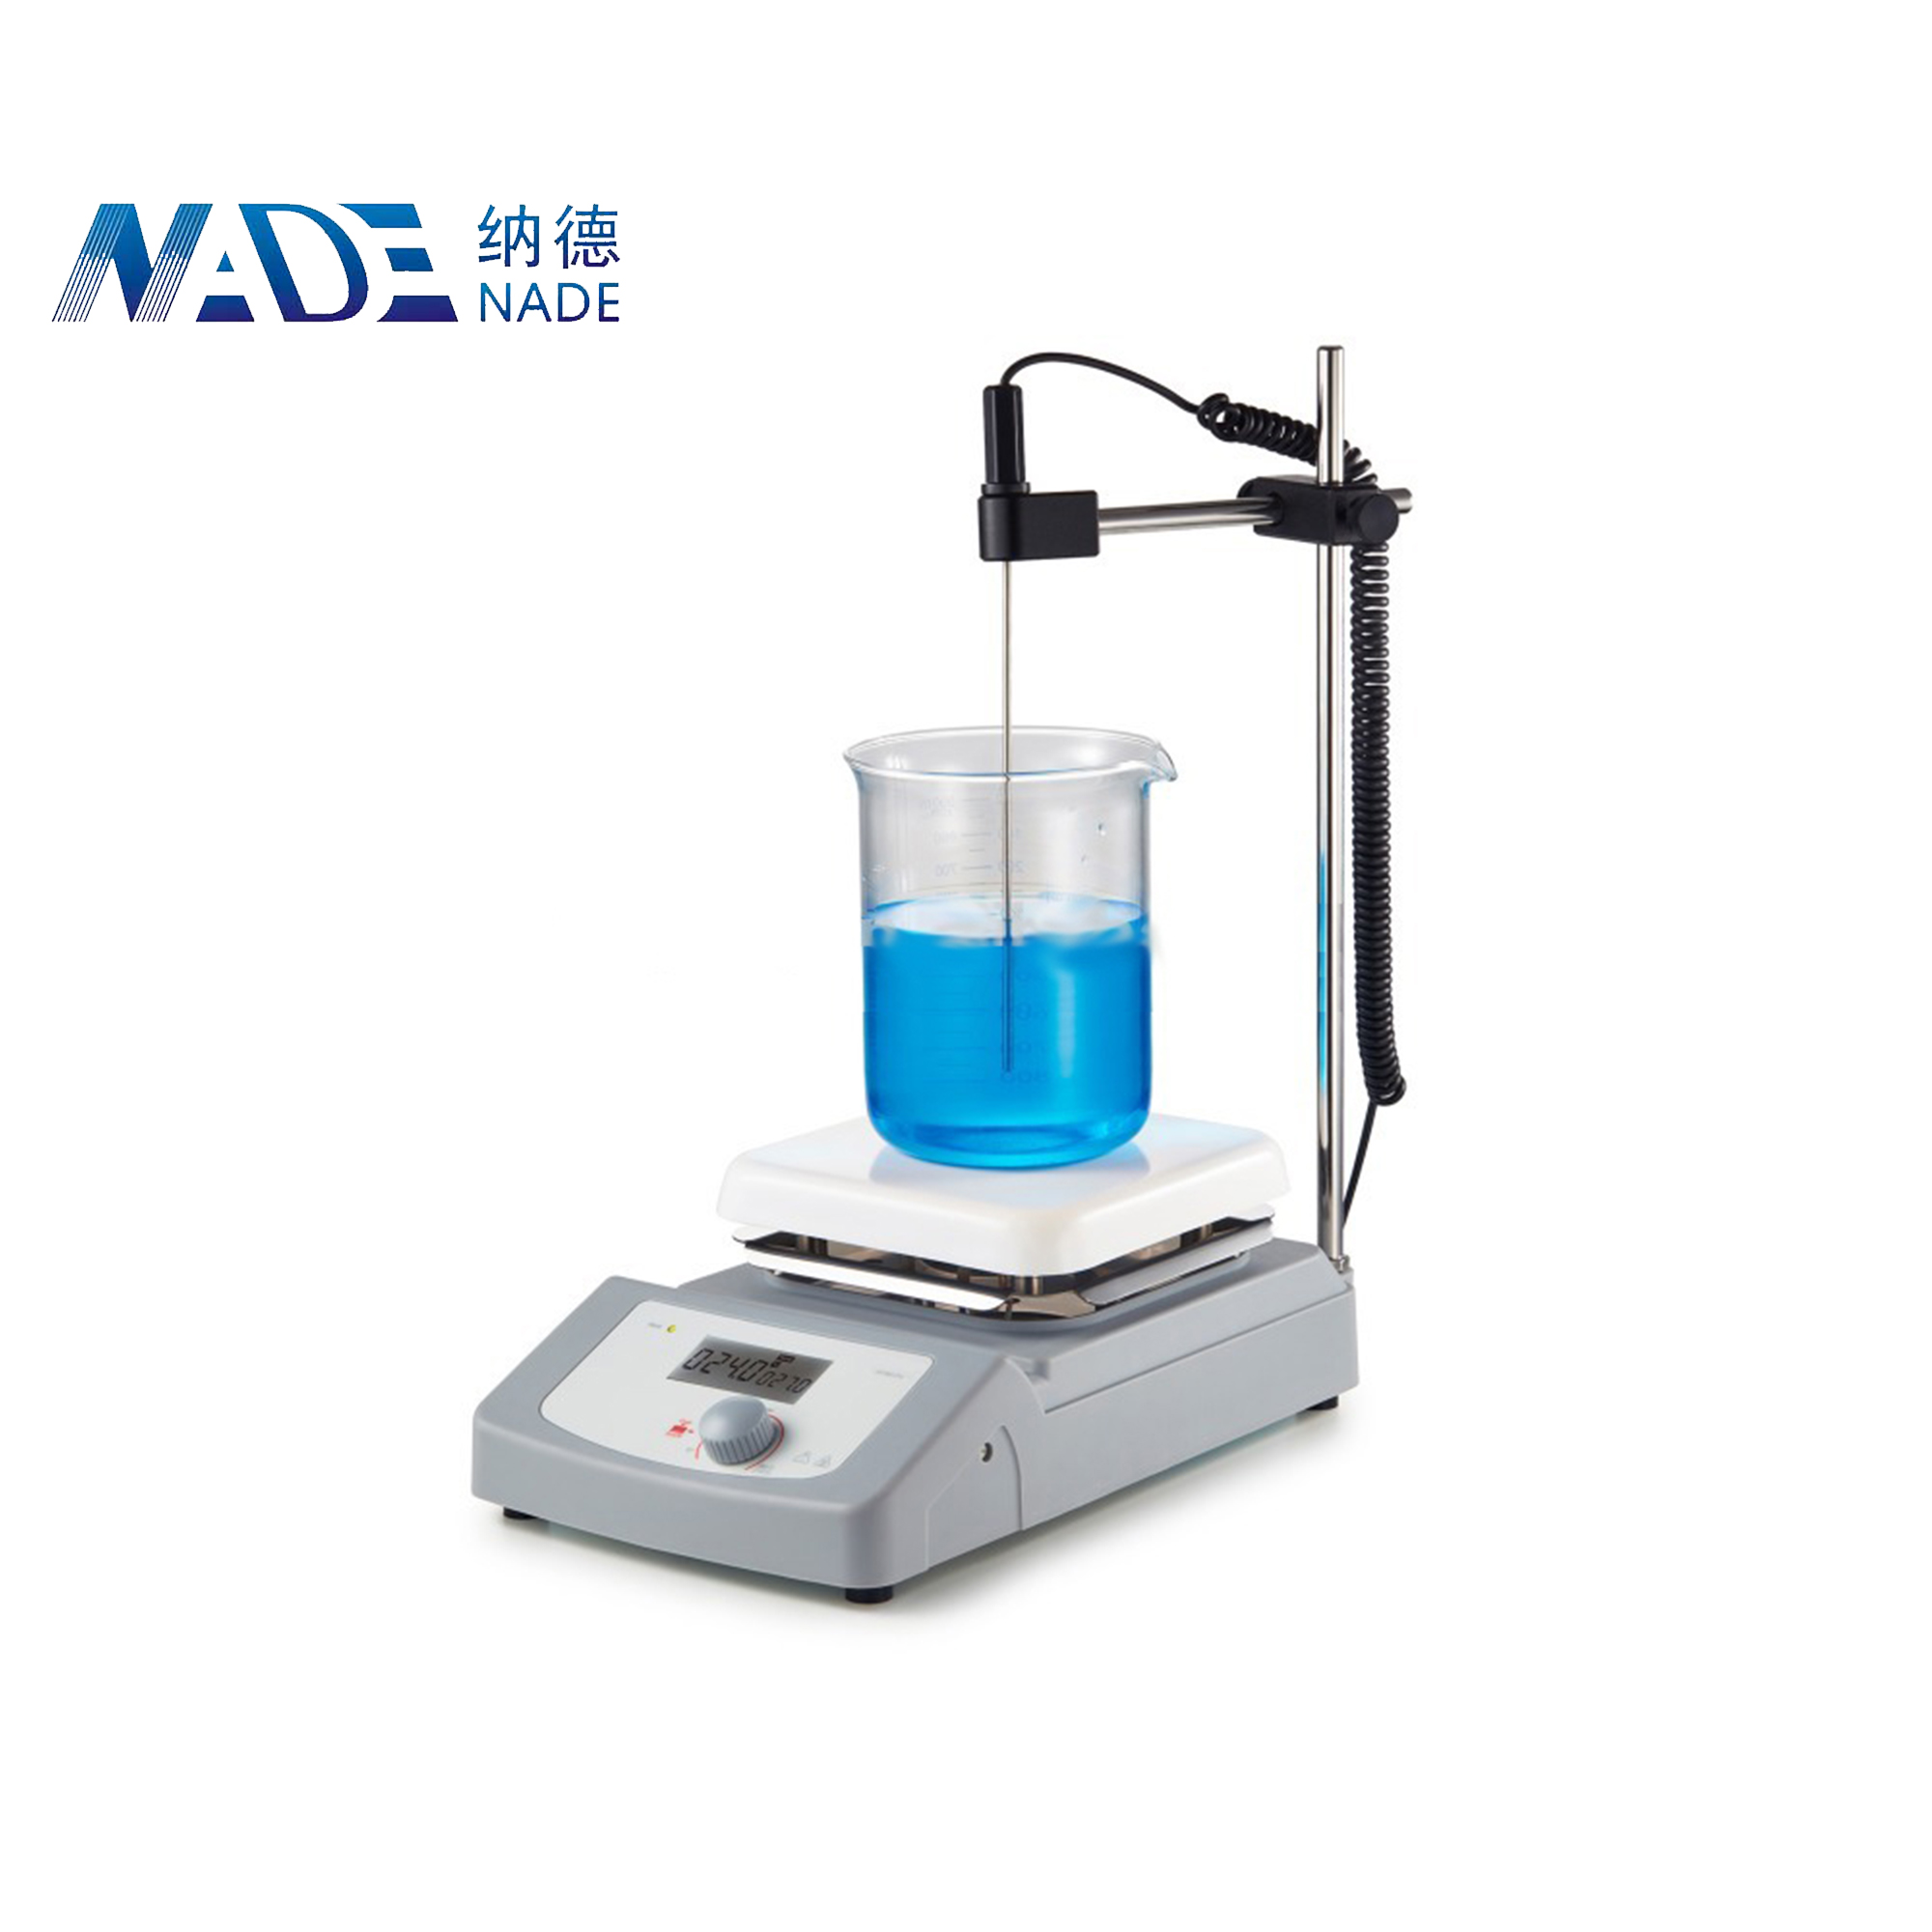 NADE 380C safe Laboratory Chemical Resistance Hotplate with PT1000 temperature sensor